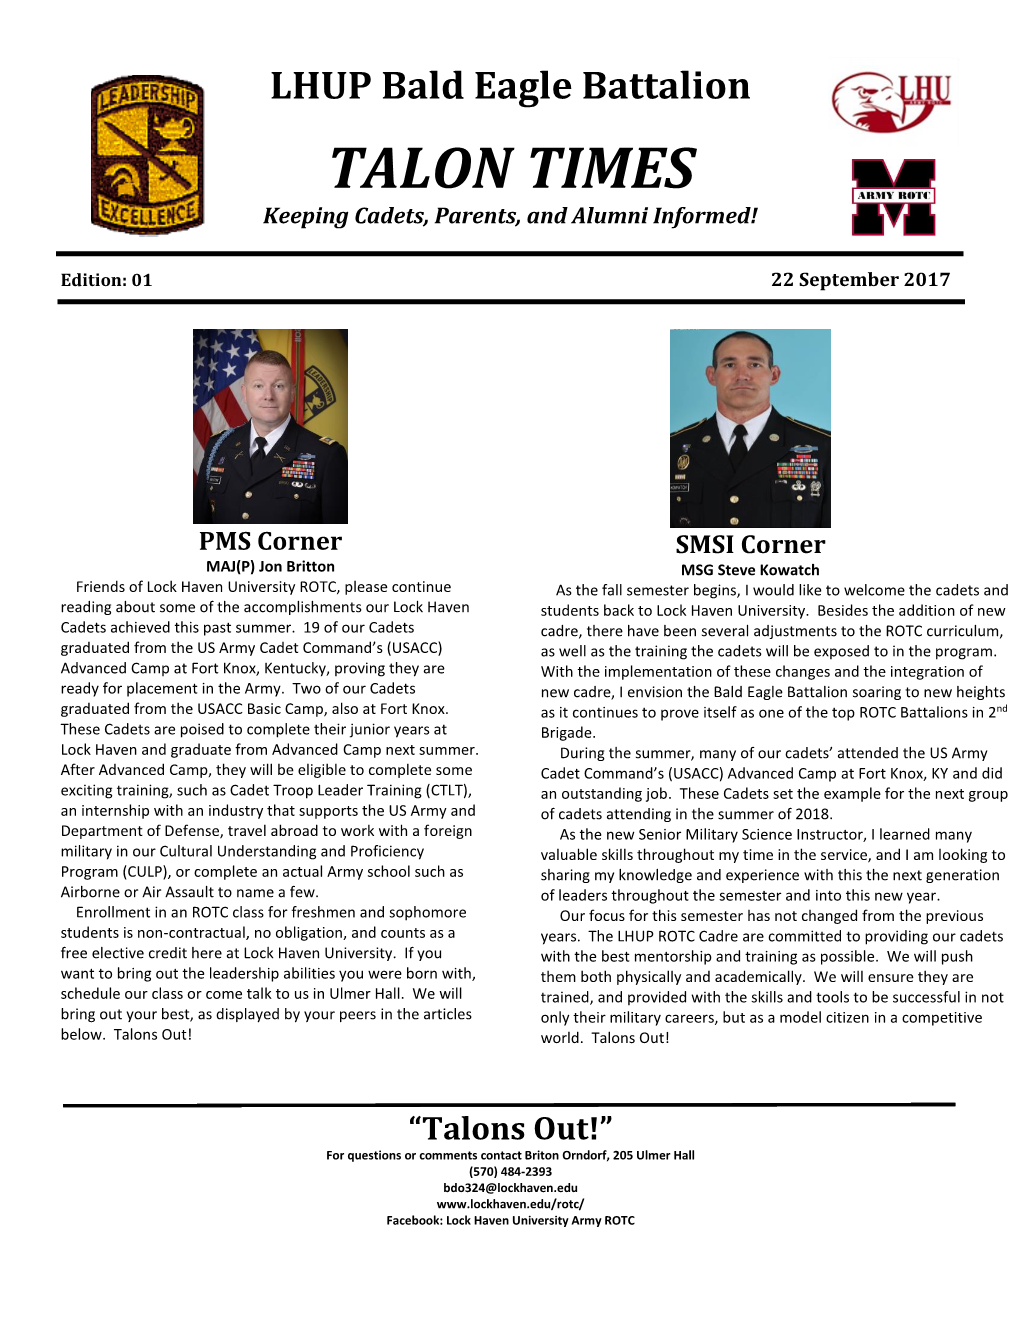 TALON TIMES Keeping Cadets, Parents, and Alumni Informed!